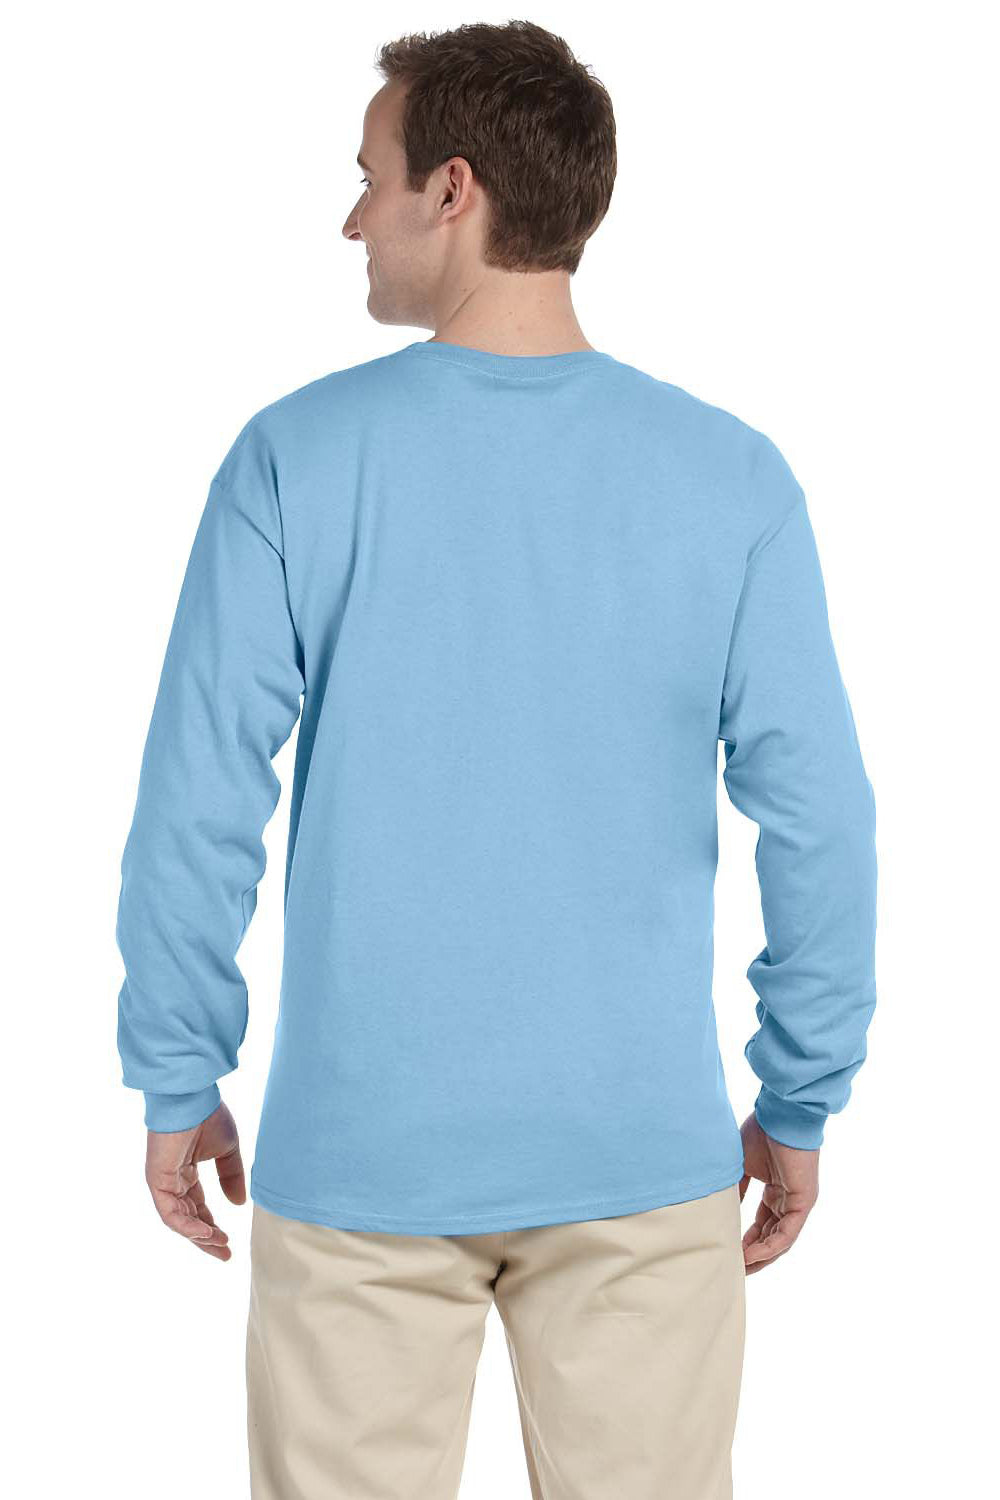 Fruit Of The Loom 4930 Mens HD Jersey Long Sleeve Crewneck T-Shirt Light Blue Back